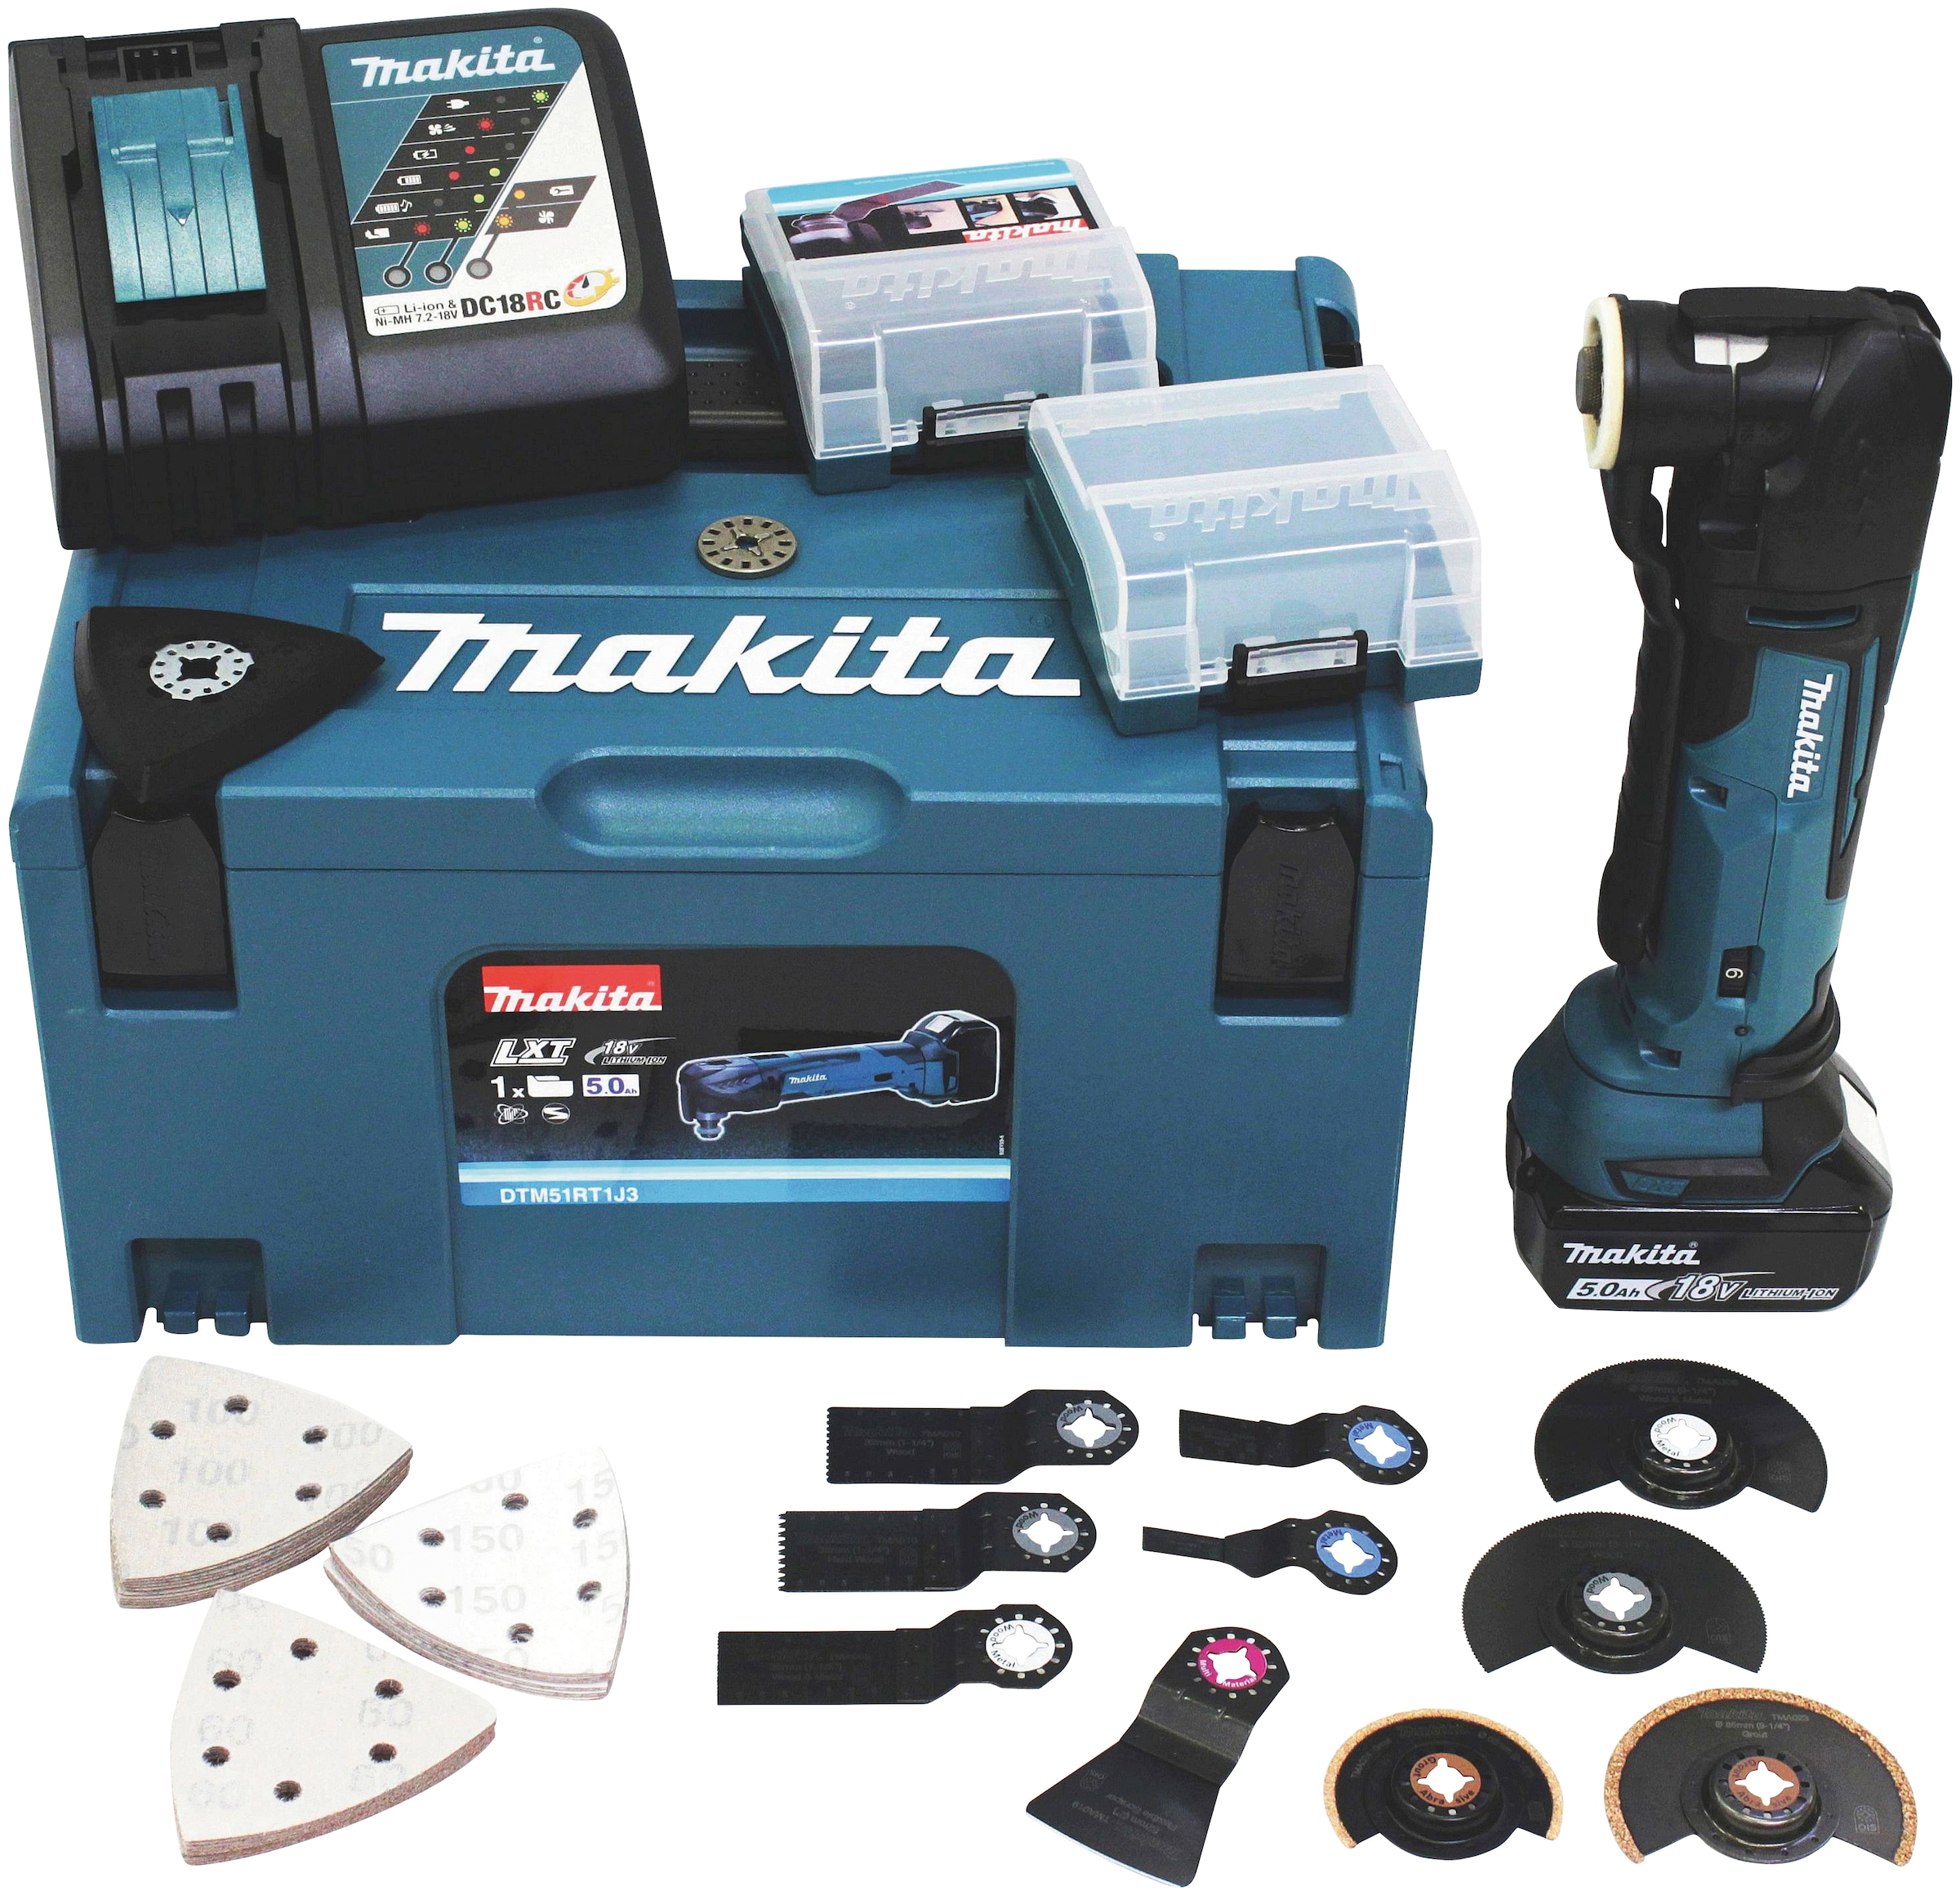 Jahren Ladegerät XXL inklusive und Garantie online (Set), Makita Akku-Multifunktionswerkzeug »DTM51RT1J3«, mit Akku kaufen 3 |